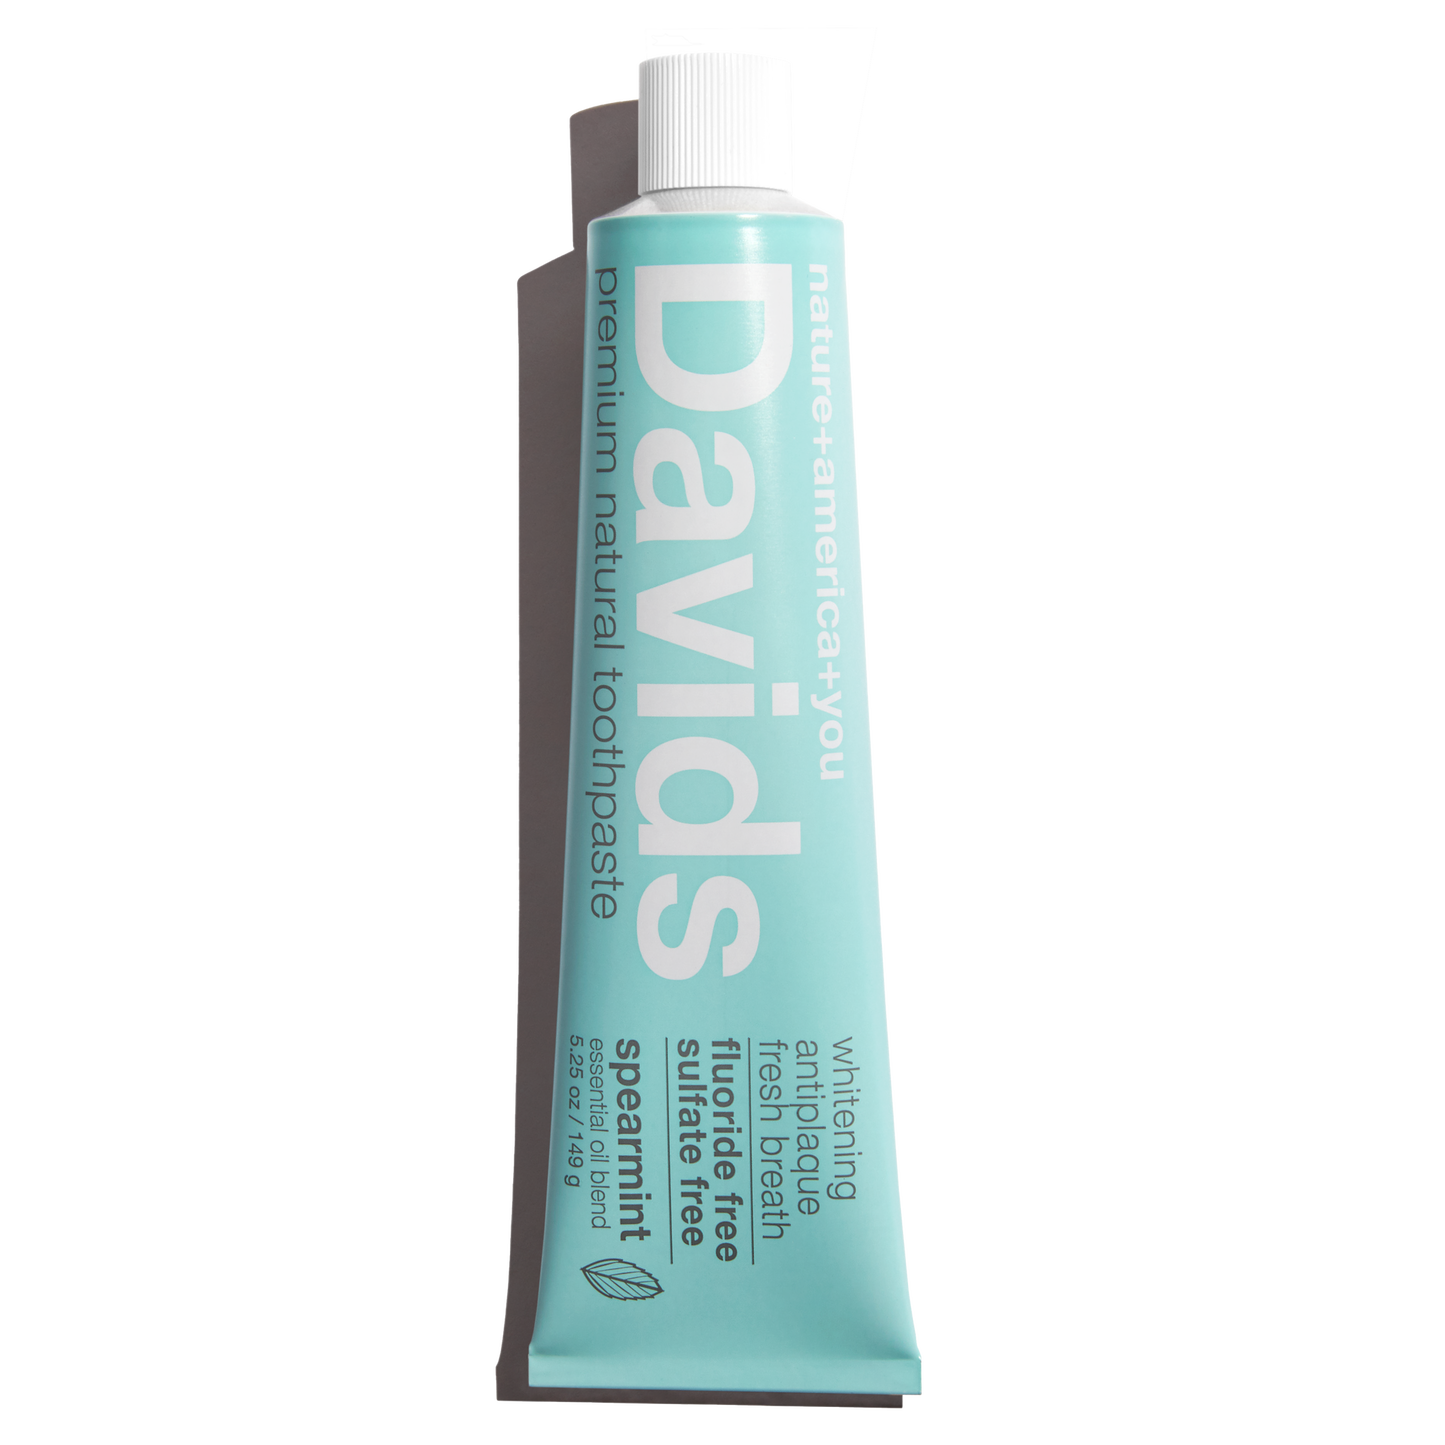 Davids Spearmint Natural Toothpaste 5.25oz